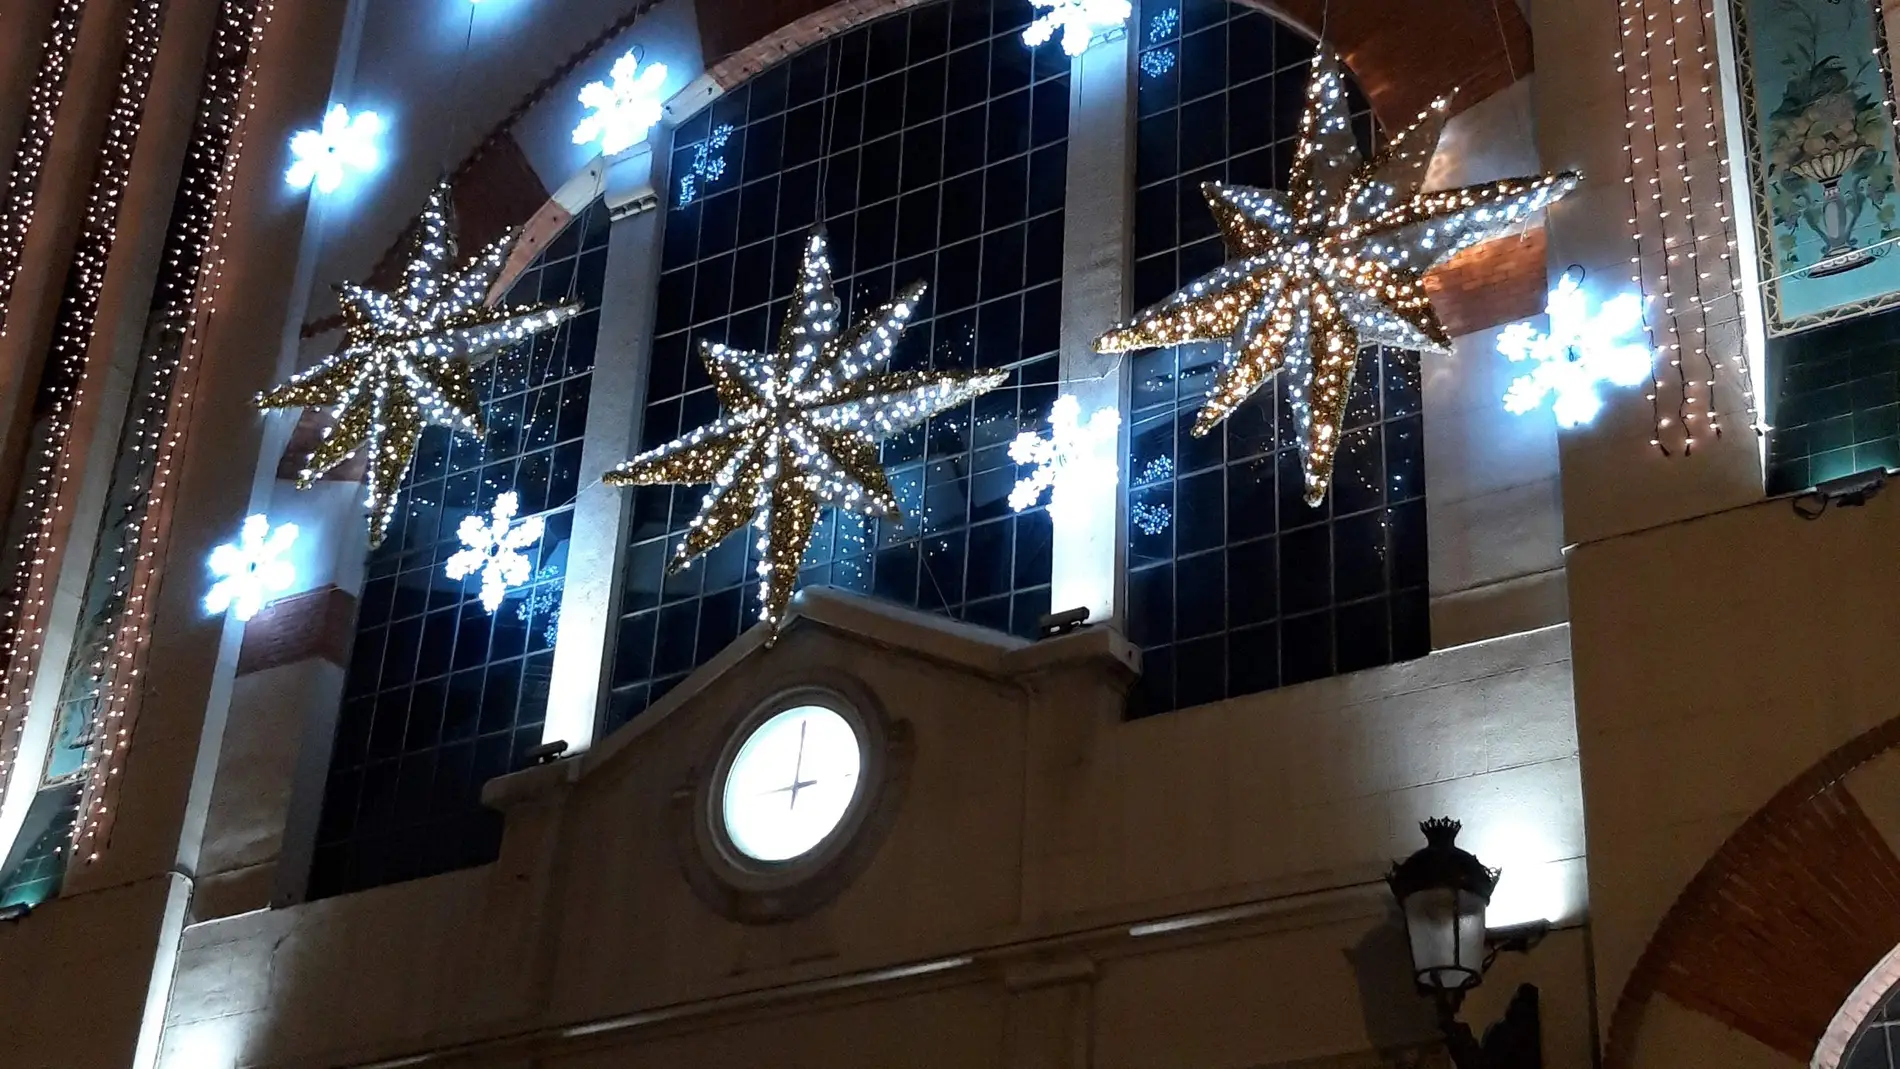 Encendido de luces de navidad Logroño 2020 4 de diciembre a las 18:00 hrs